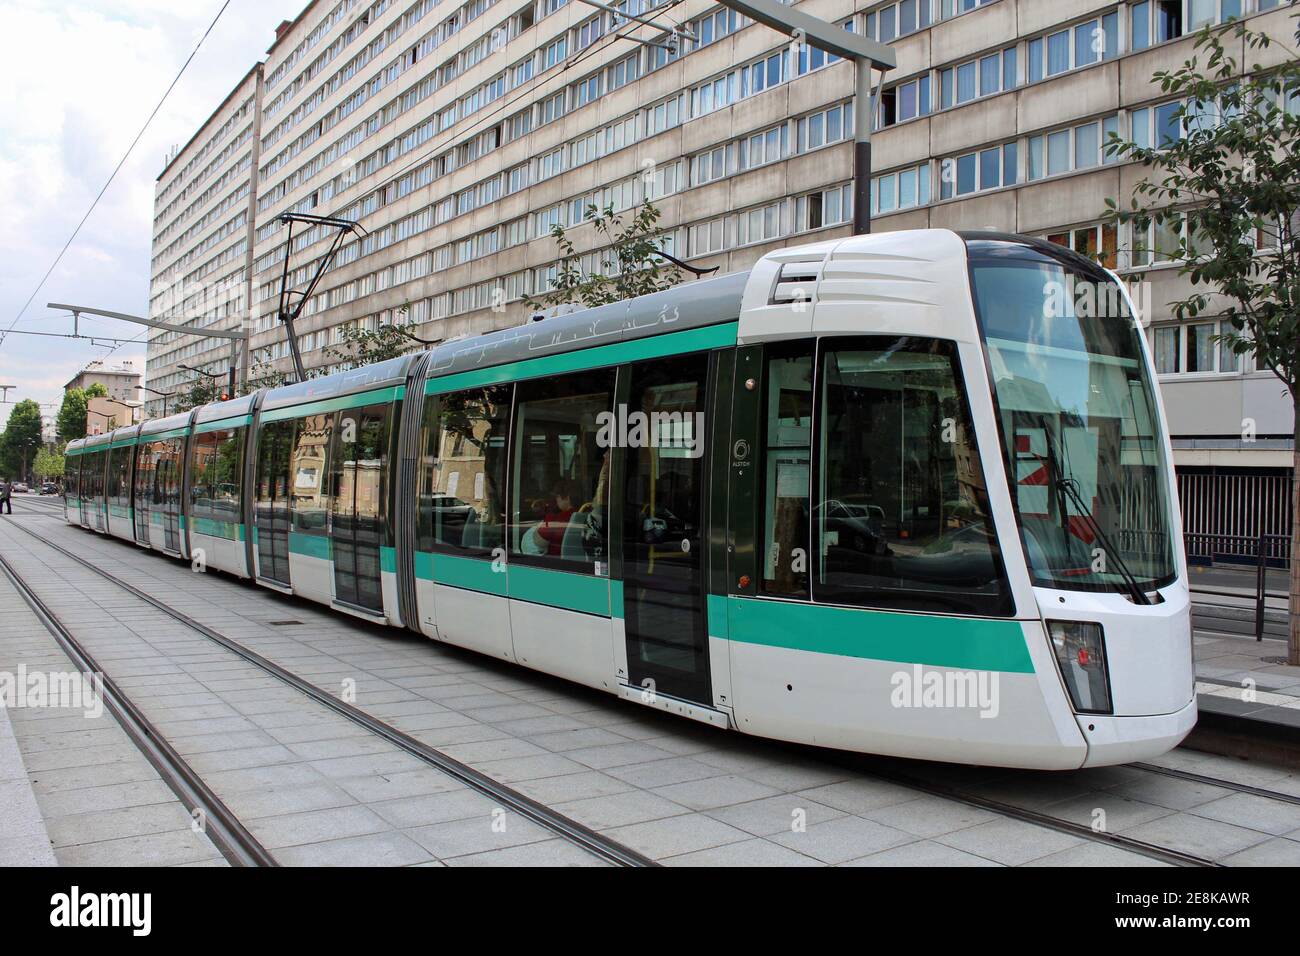 Tramway parisien Stock Photo